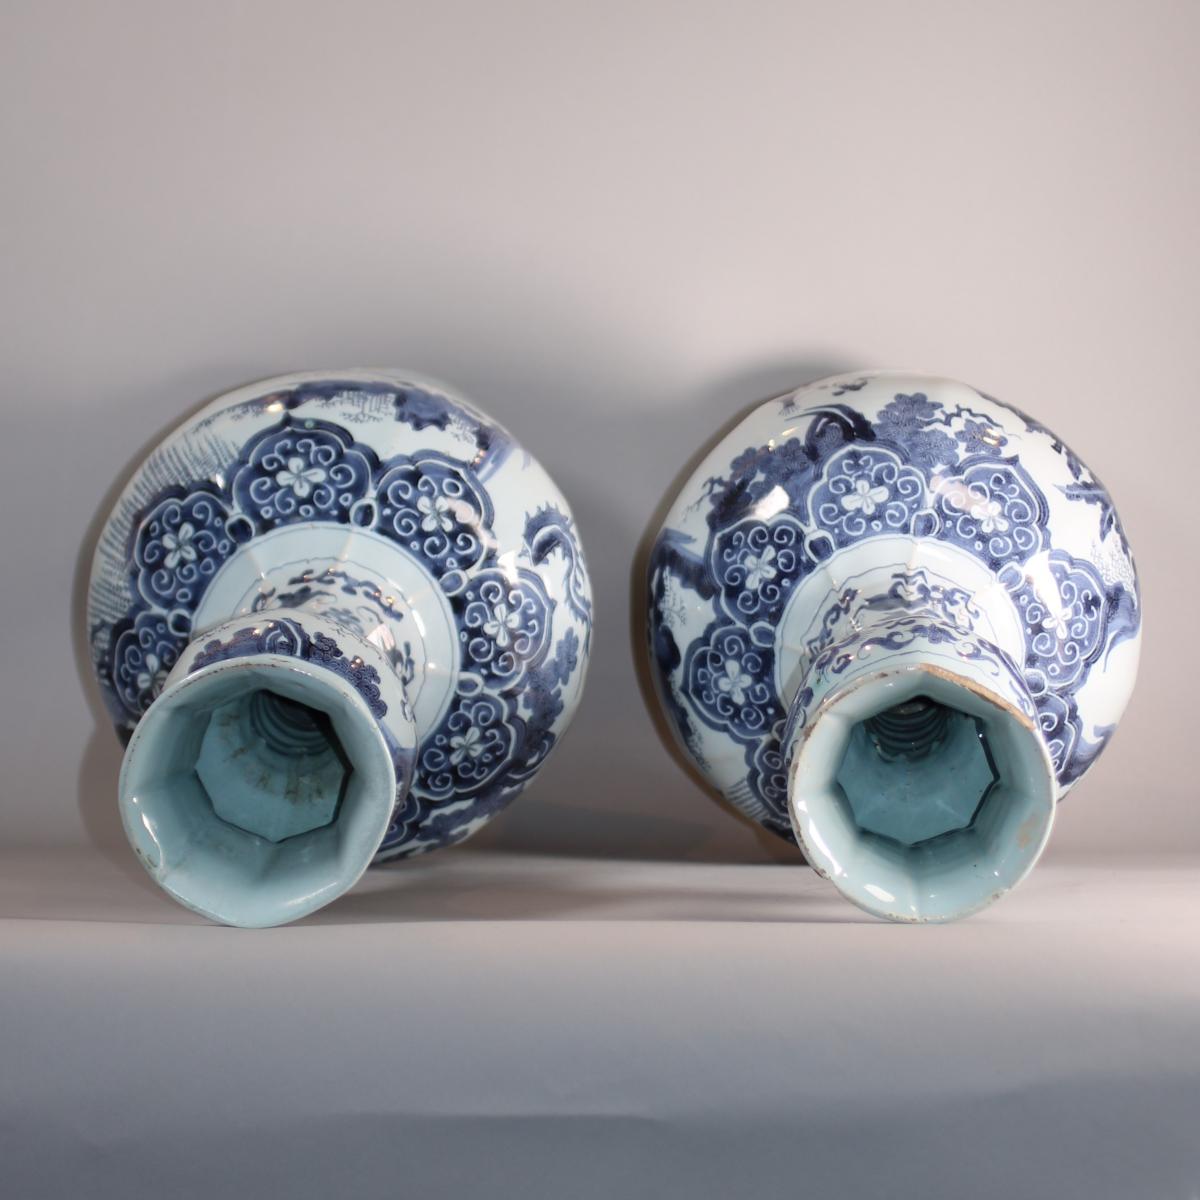 Dutch Delft blue and white garlic-necked vases, circa 1700